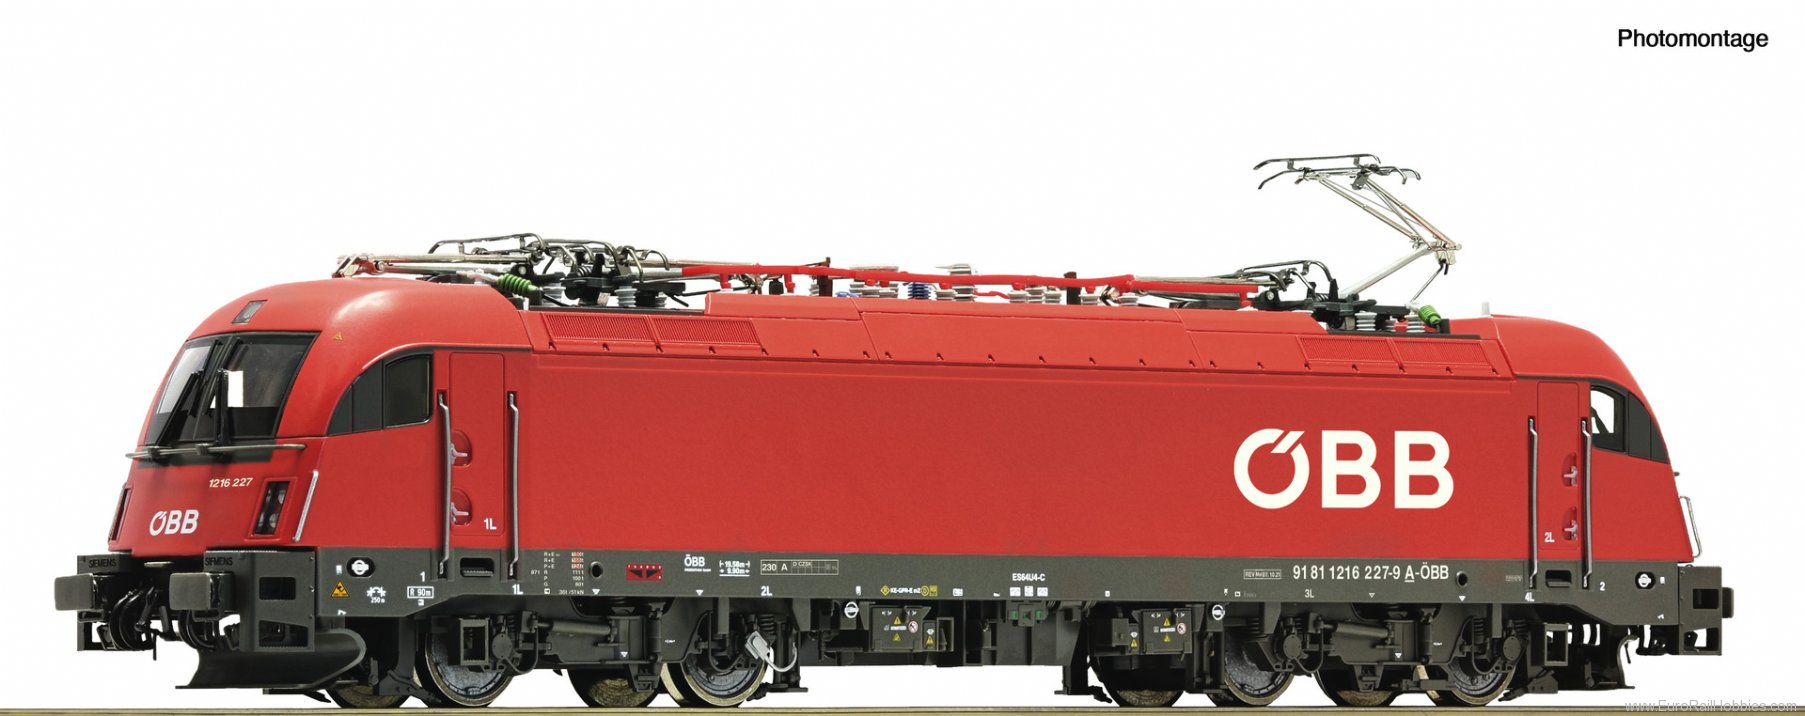 Roco 7510032 Electric locomotive 1216 227-9, ÃBB (DCC S